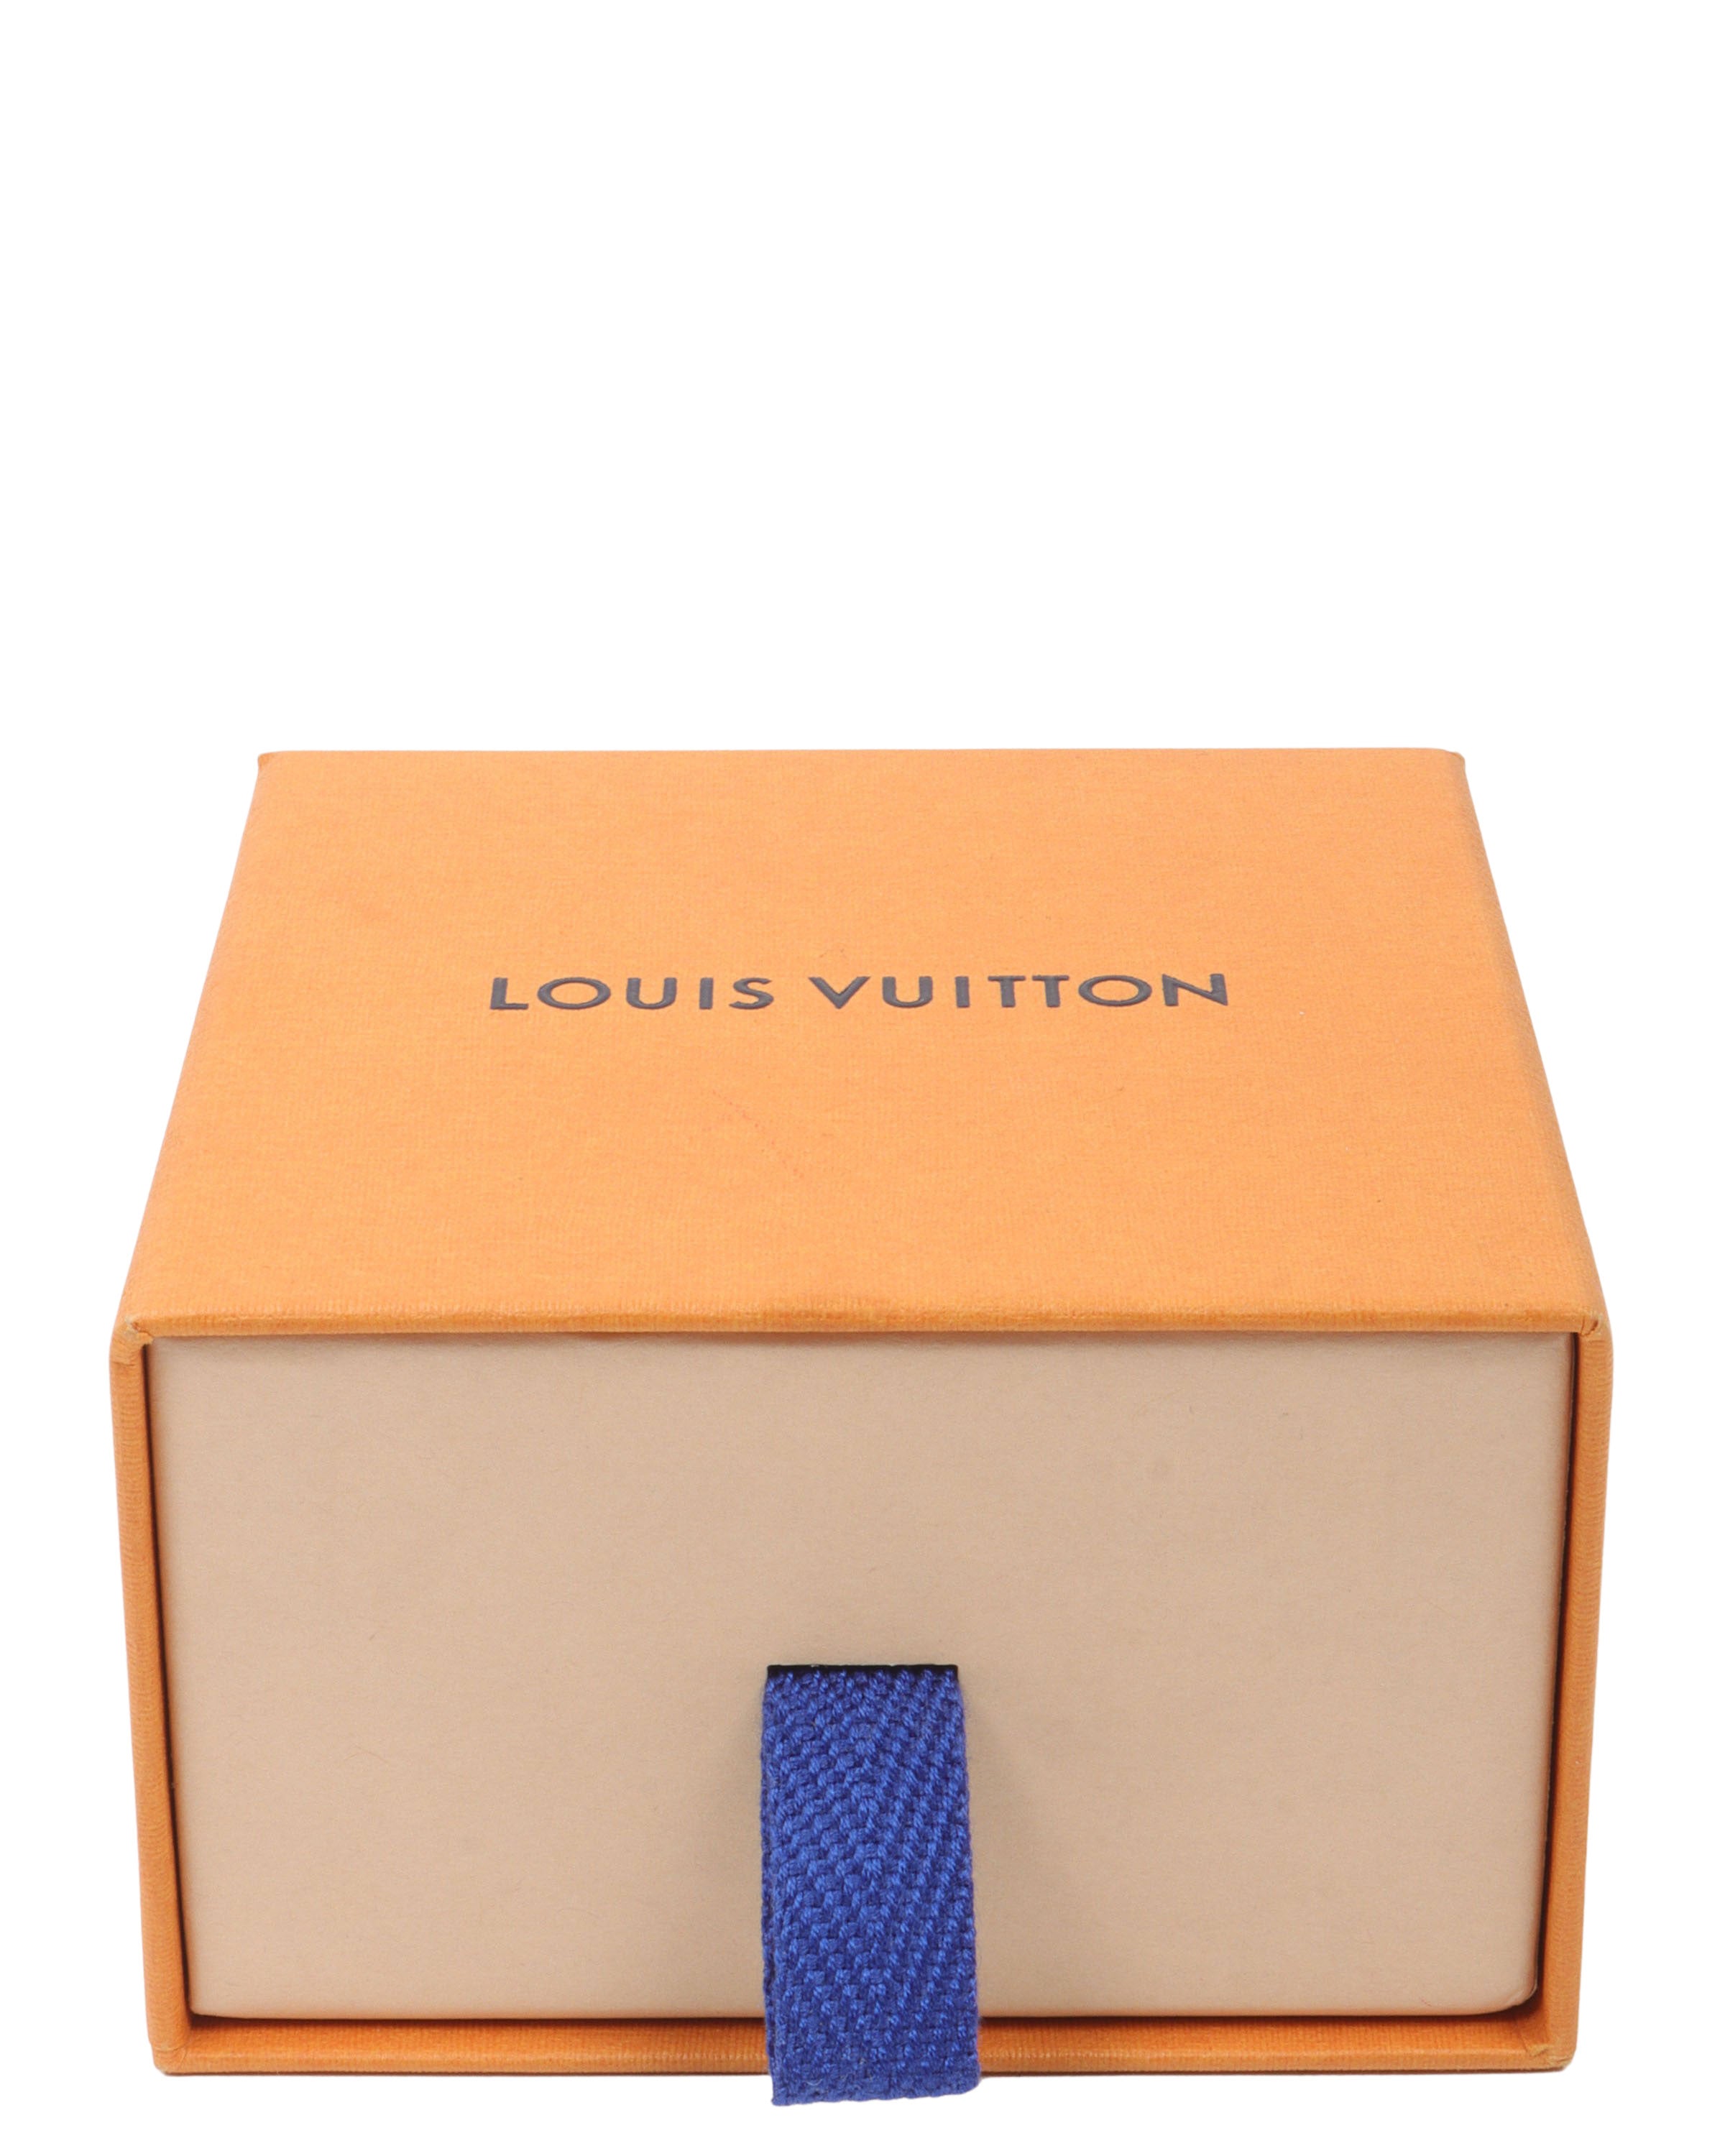 Louis Vuitton Instinct Rings (set of 2) Review 